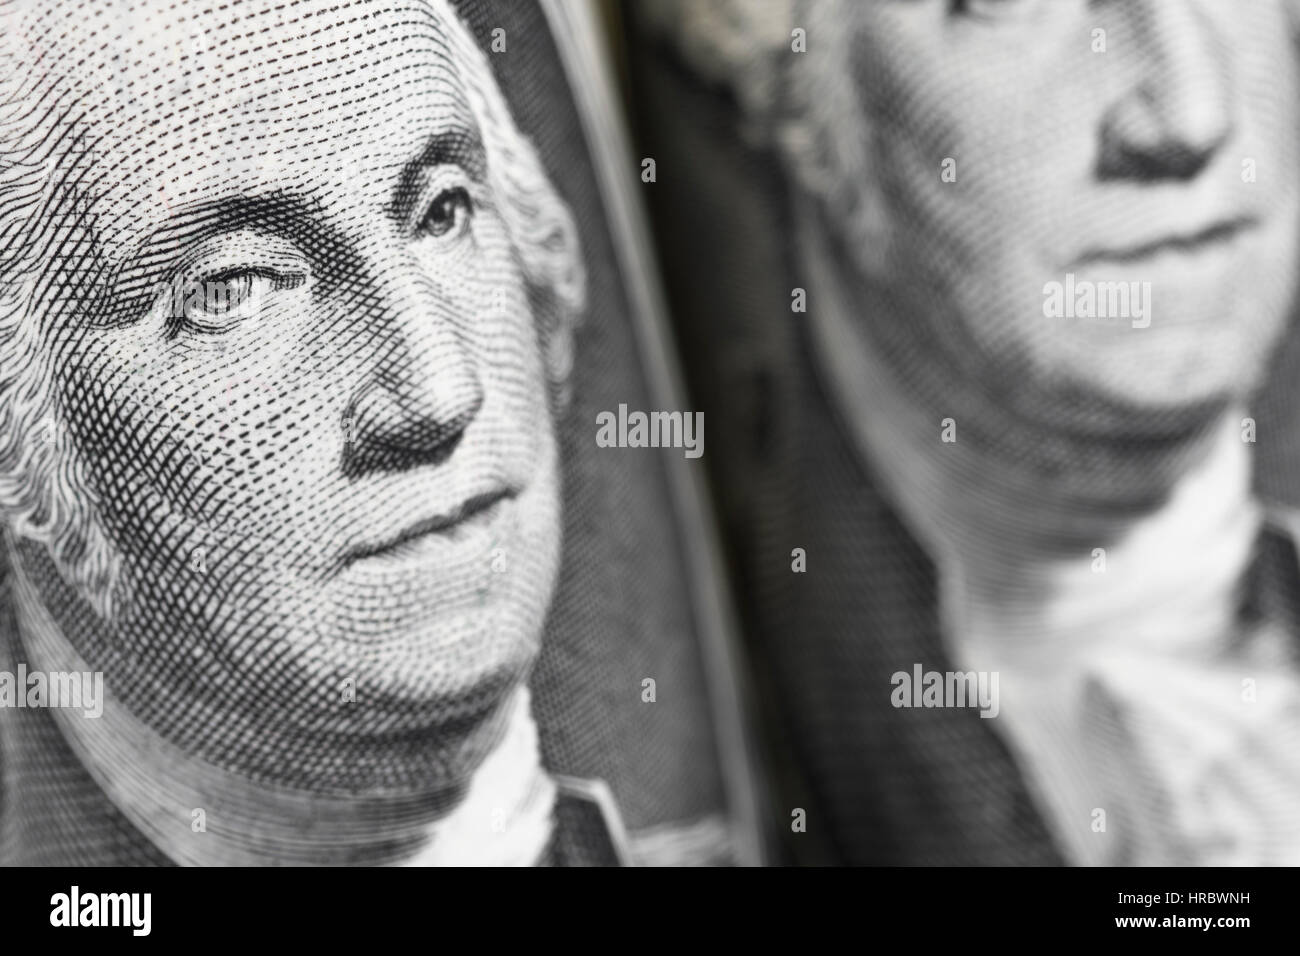 Macro-photo of George Washington's face on US $1 / one dollar bill. Stock Photo